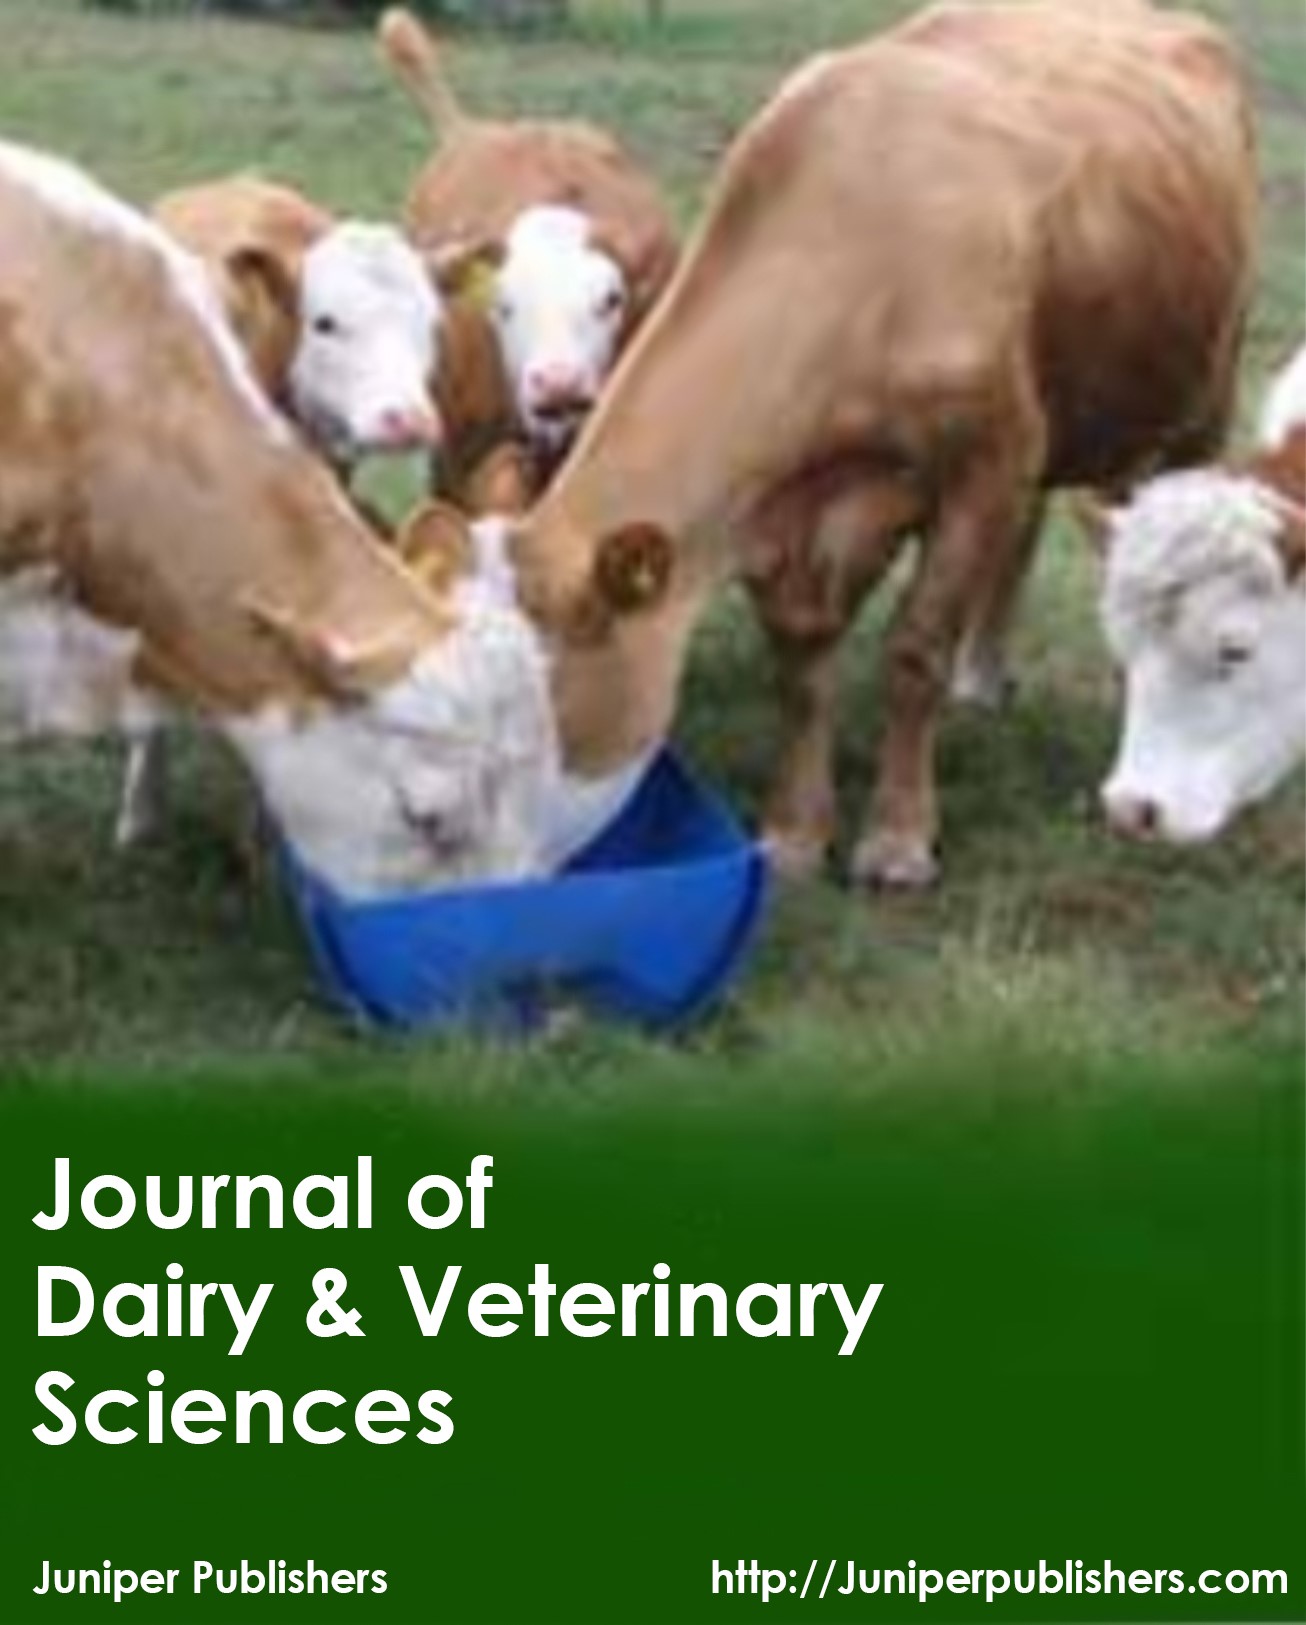 Juniper Publishers Journal of Dairy & Veterinary Sciences